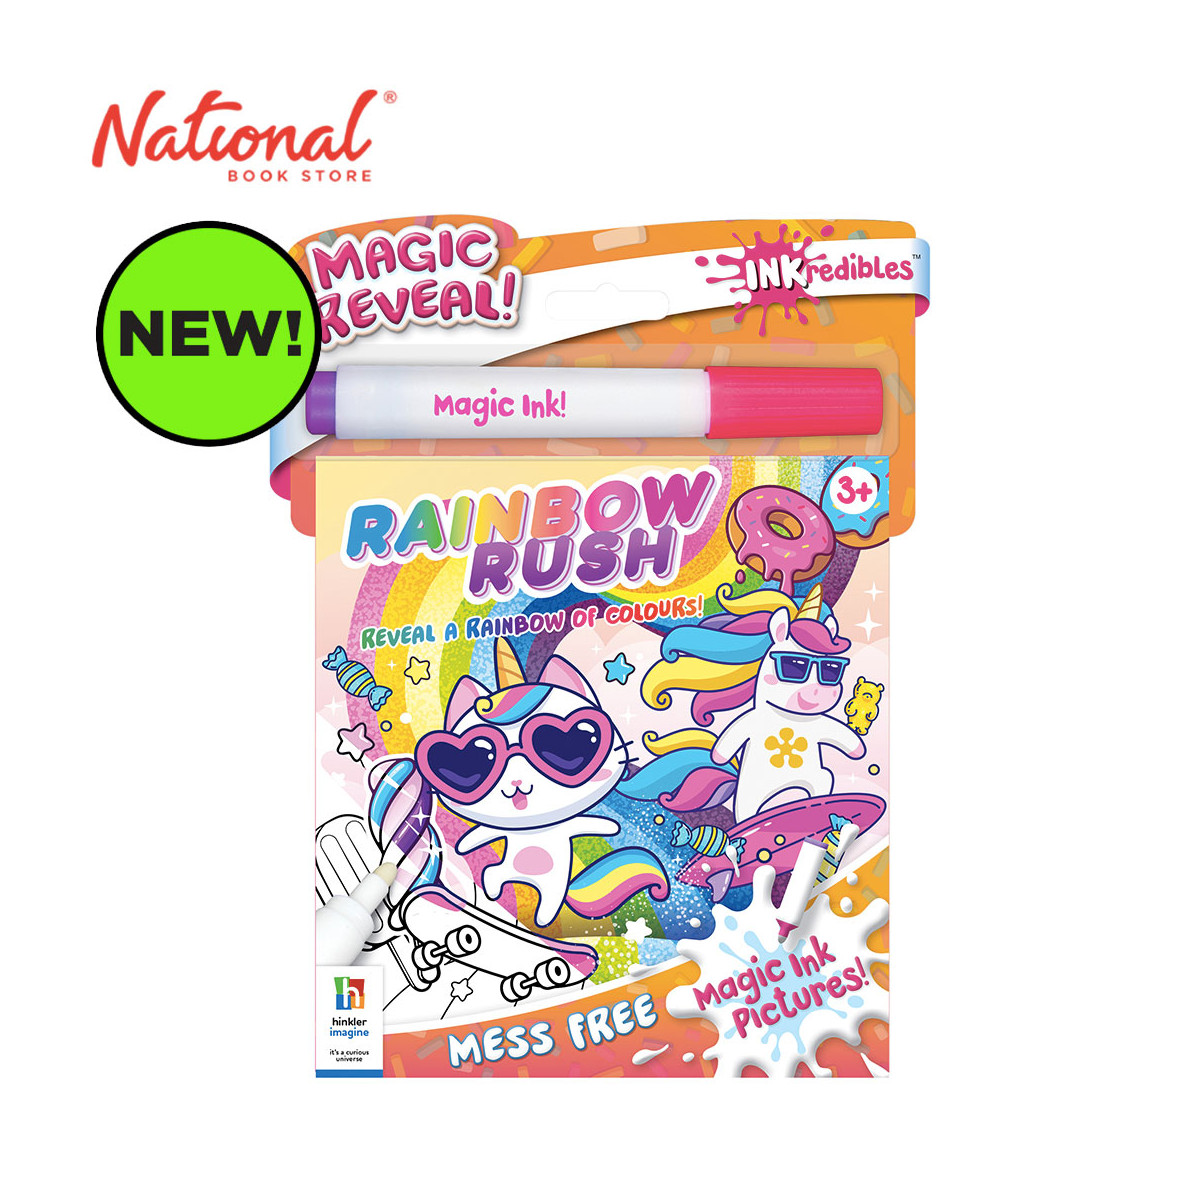 Magic Reveal: Rainbow Rush Magic Ink - Trade Paperback - Activity Book for Kids